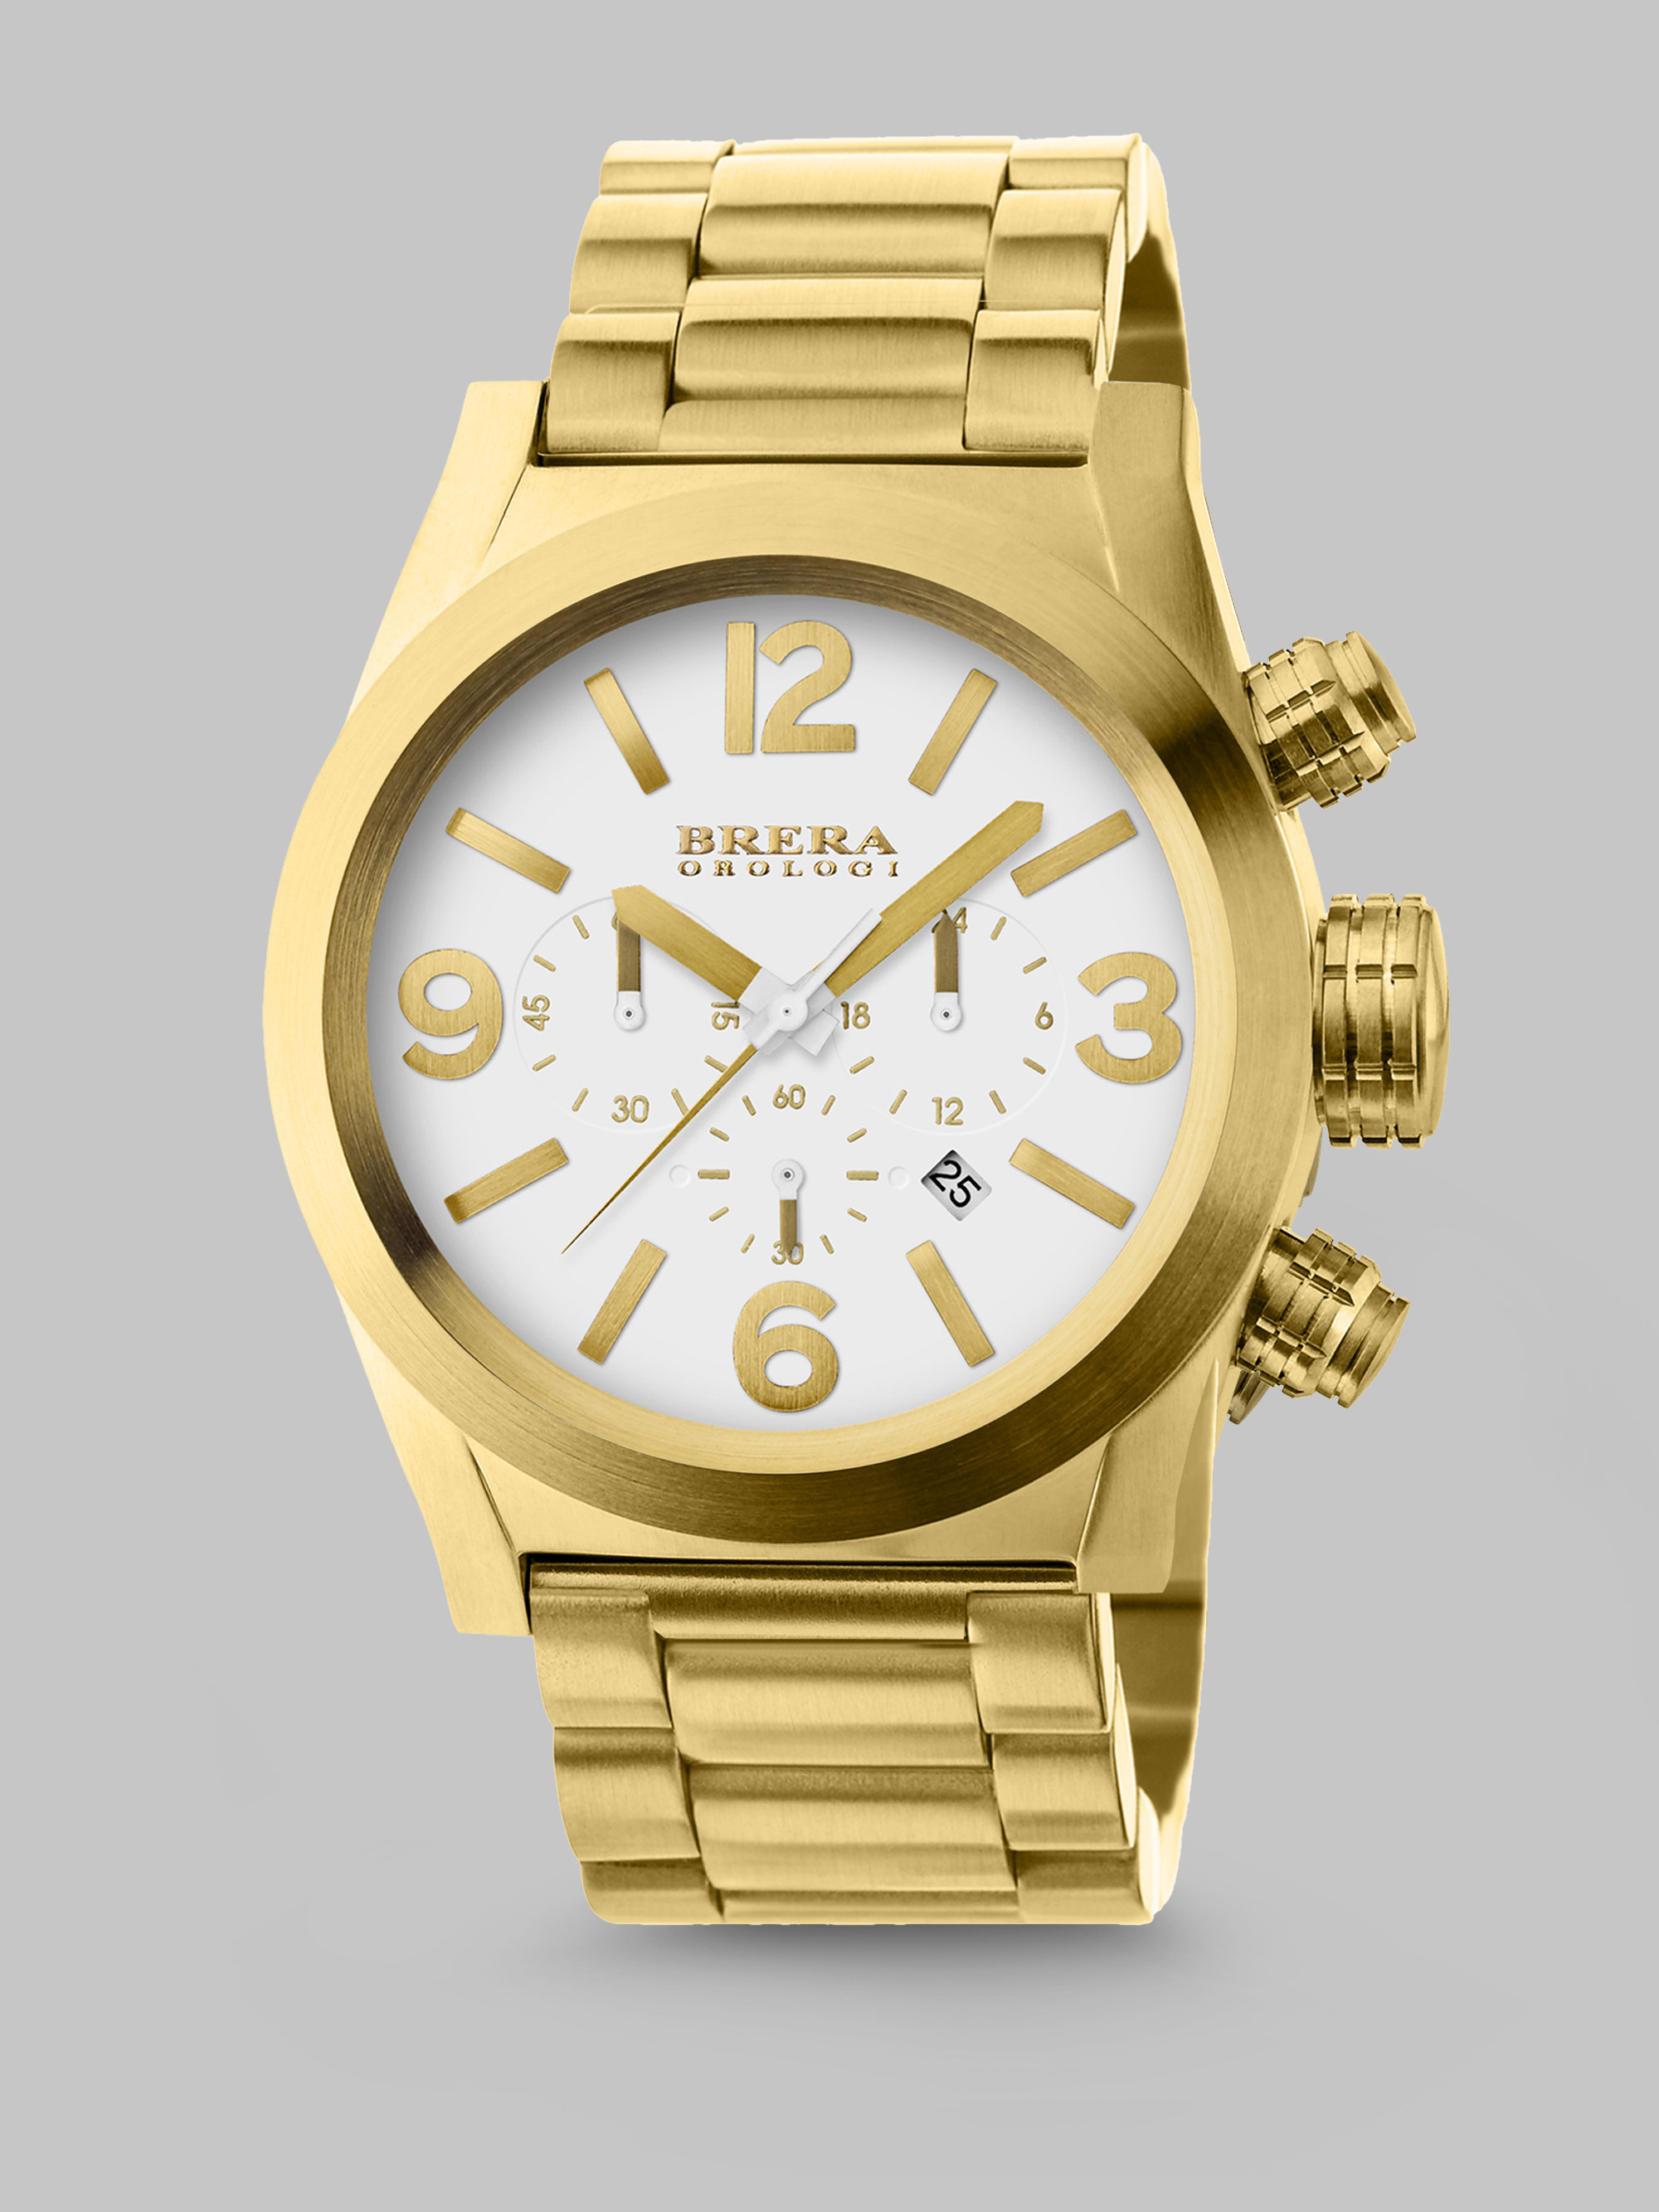 Lyst - Brera Orologi Eterno Chronograph Watch in Metallic for Men